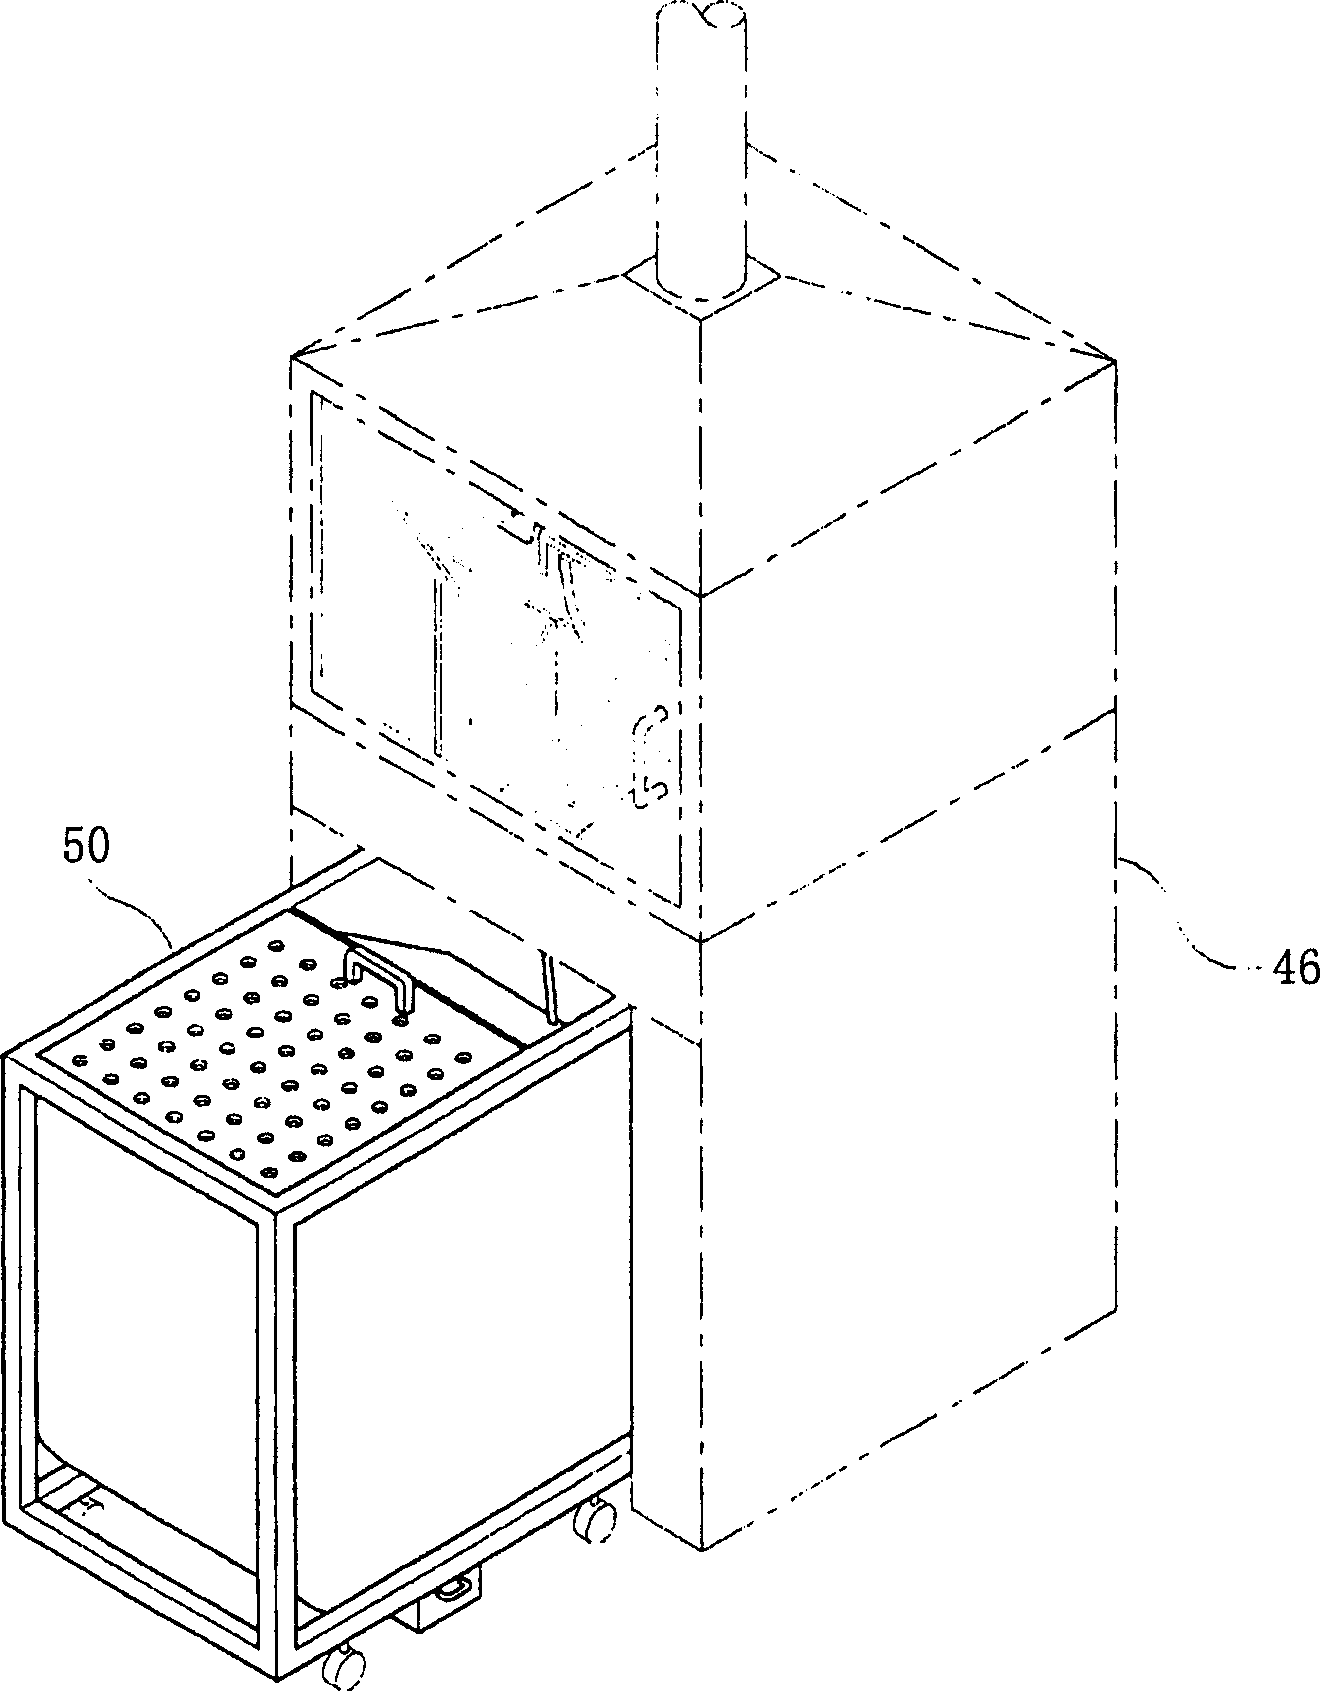 Apparatus for preparing cremated body crystalline grain